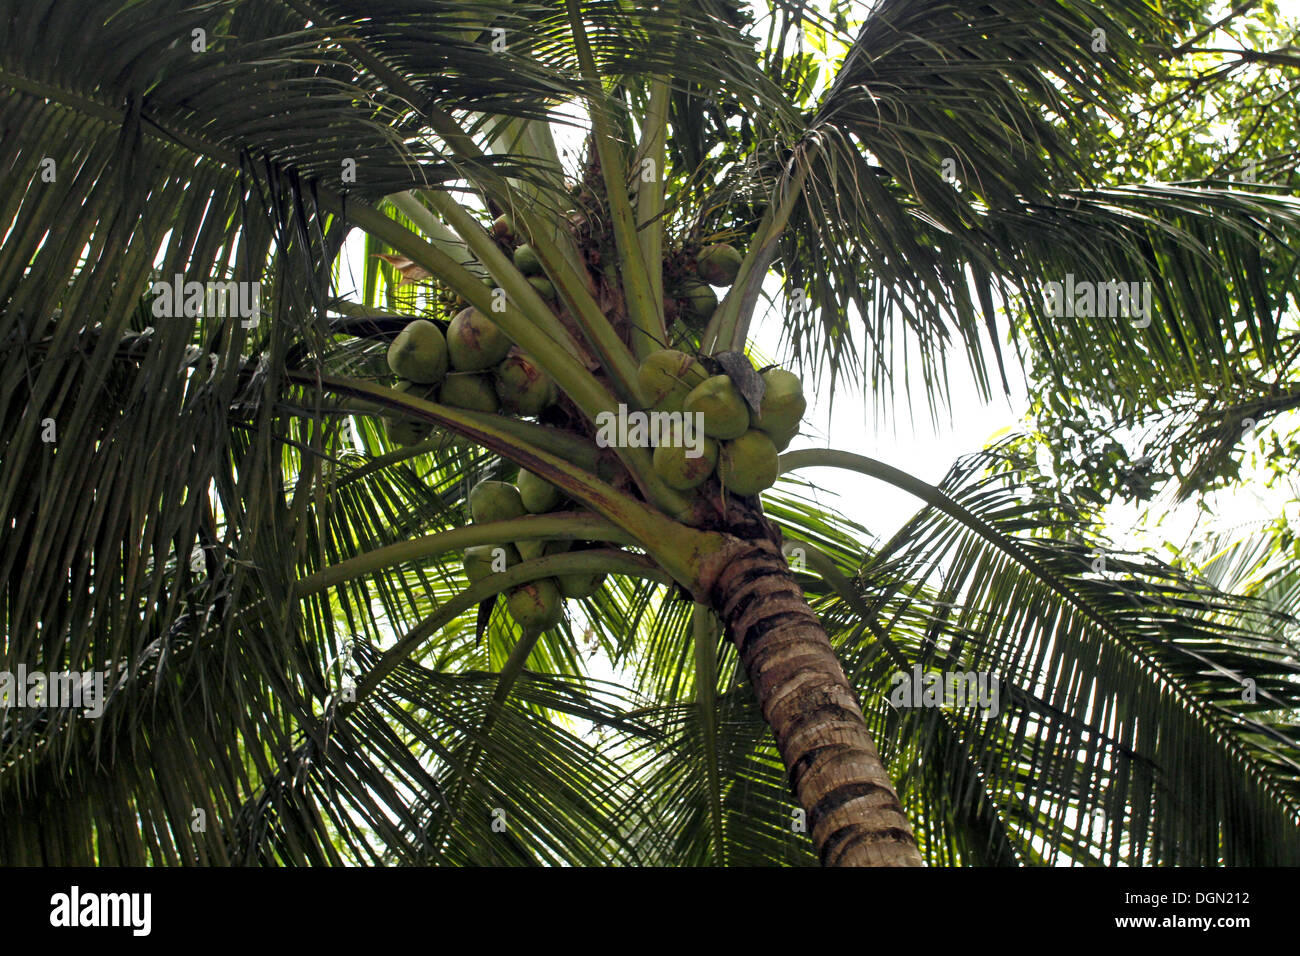 KING COCONUTS IN PALM TREE UDAWALAWE SRI LANKA 16 March 2013 Stock Photo